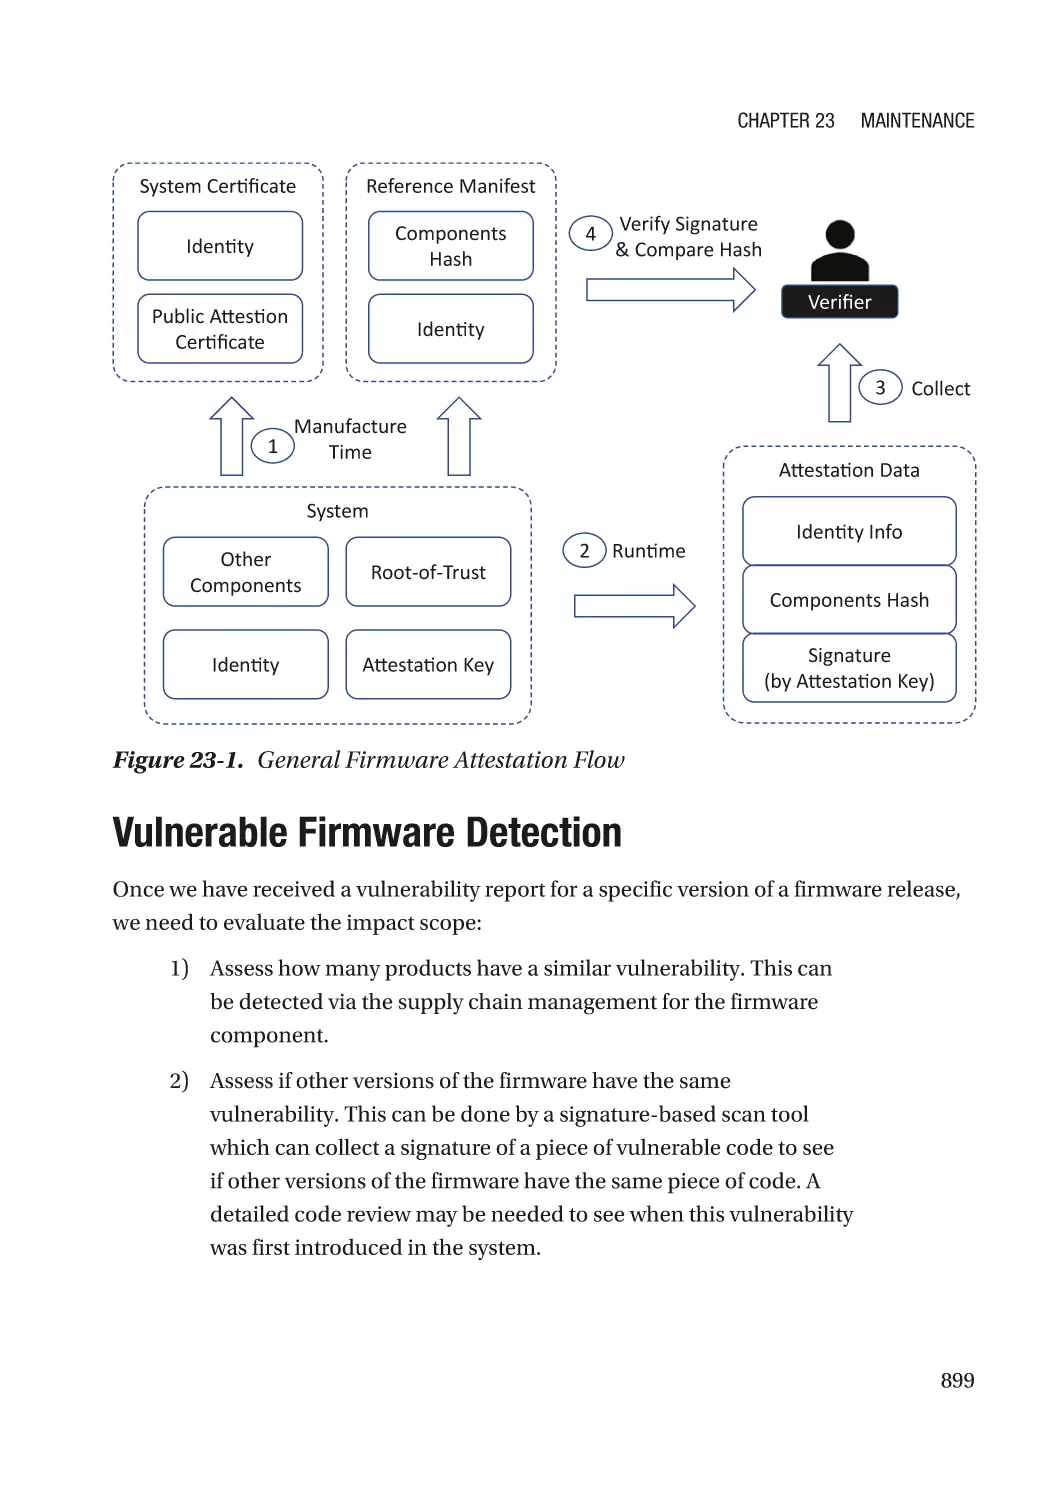 Vulnerable Firmware Detection